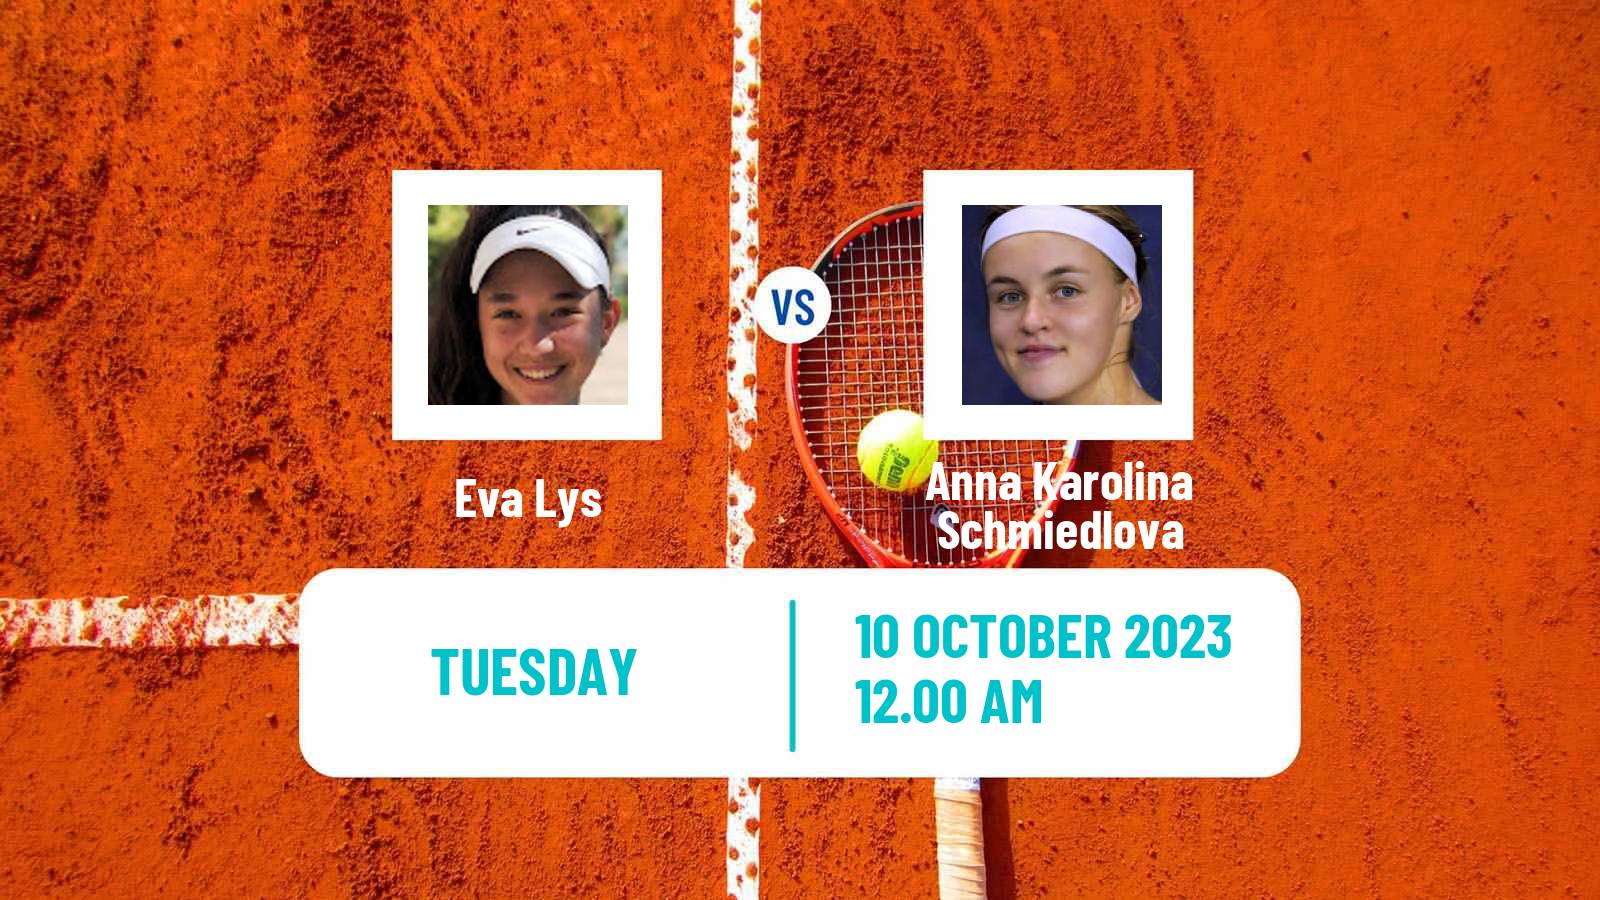 Tennis WTA Seoul Eva Lys - Anna Karolina Schmiedlova